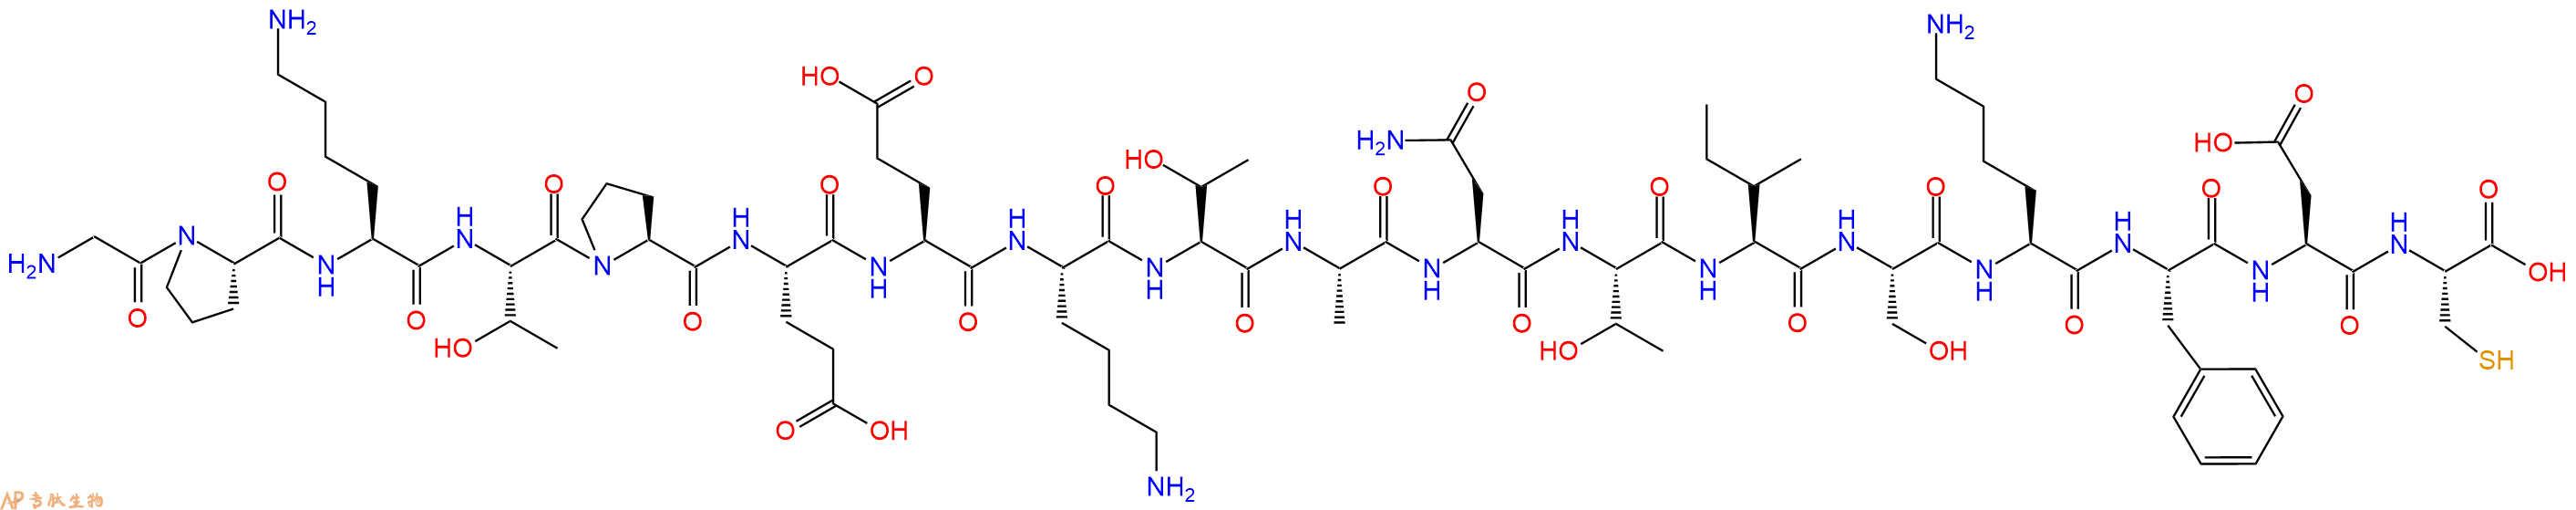 专肽生物产品蛋白激酶C片段 Protein Kinase C(beta) Peptide